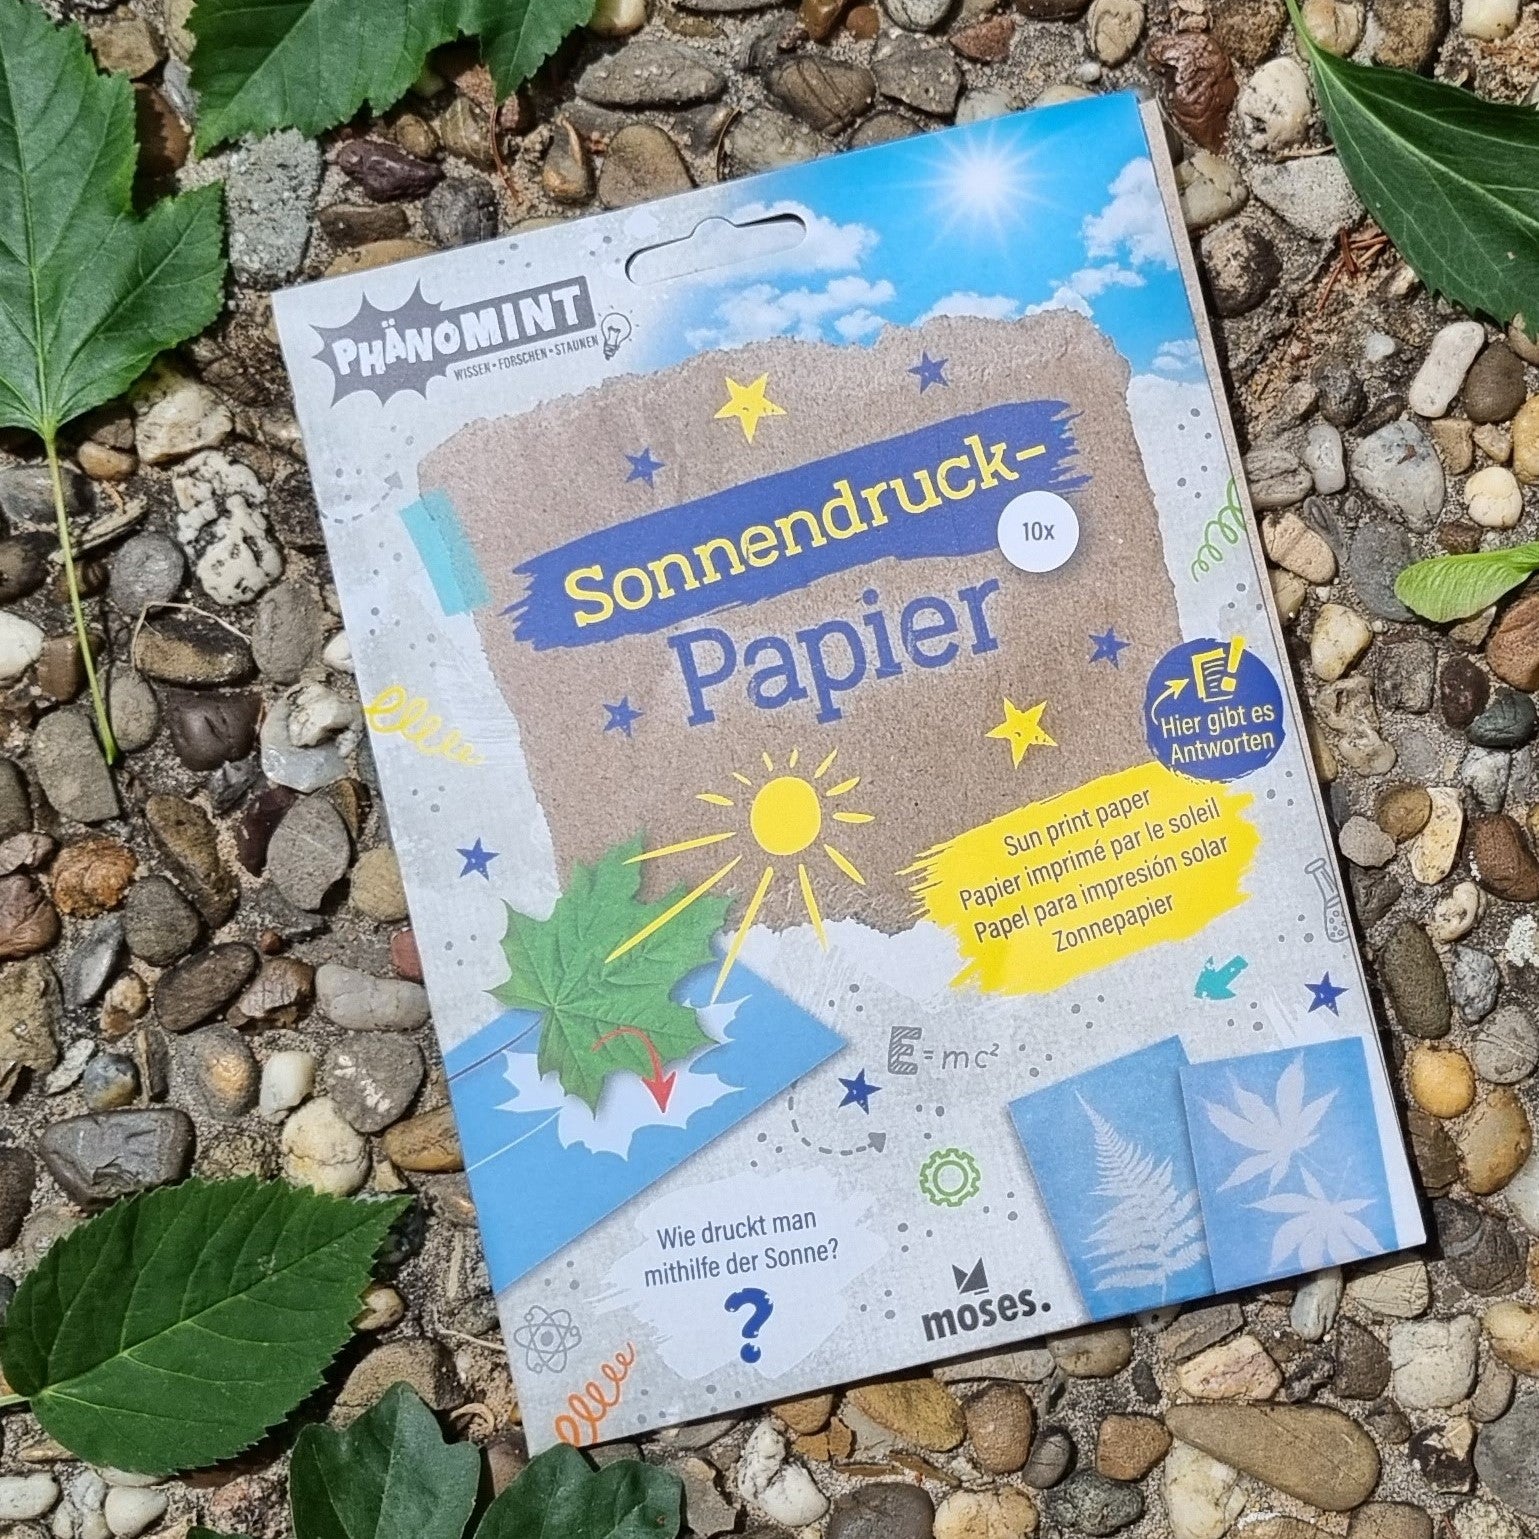 Sonnendruck-Papier (PhänoMINT)